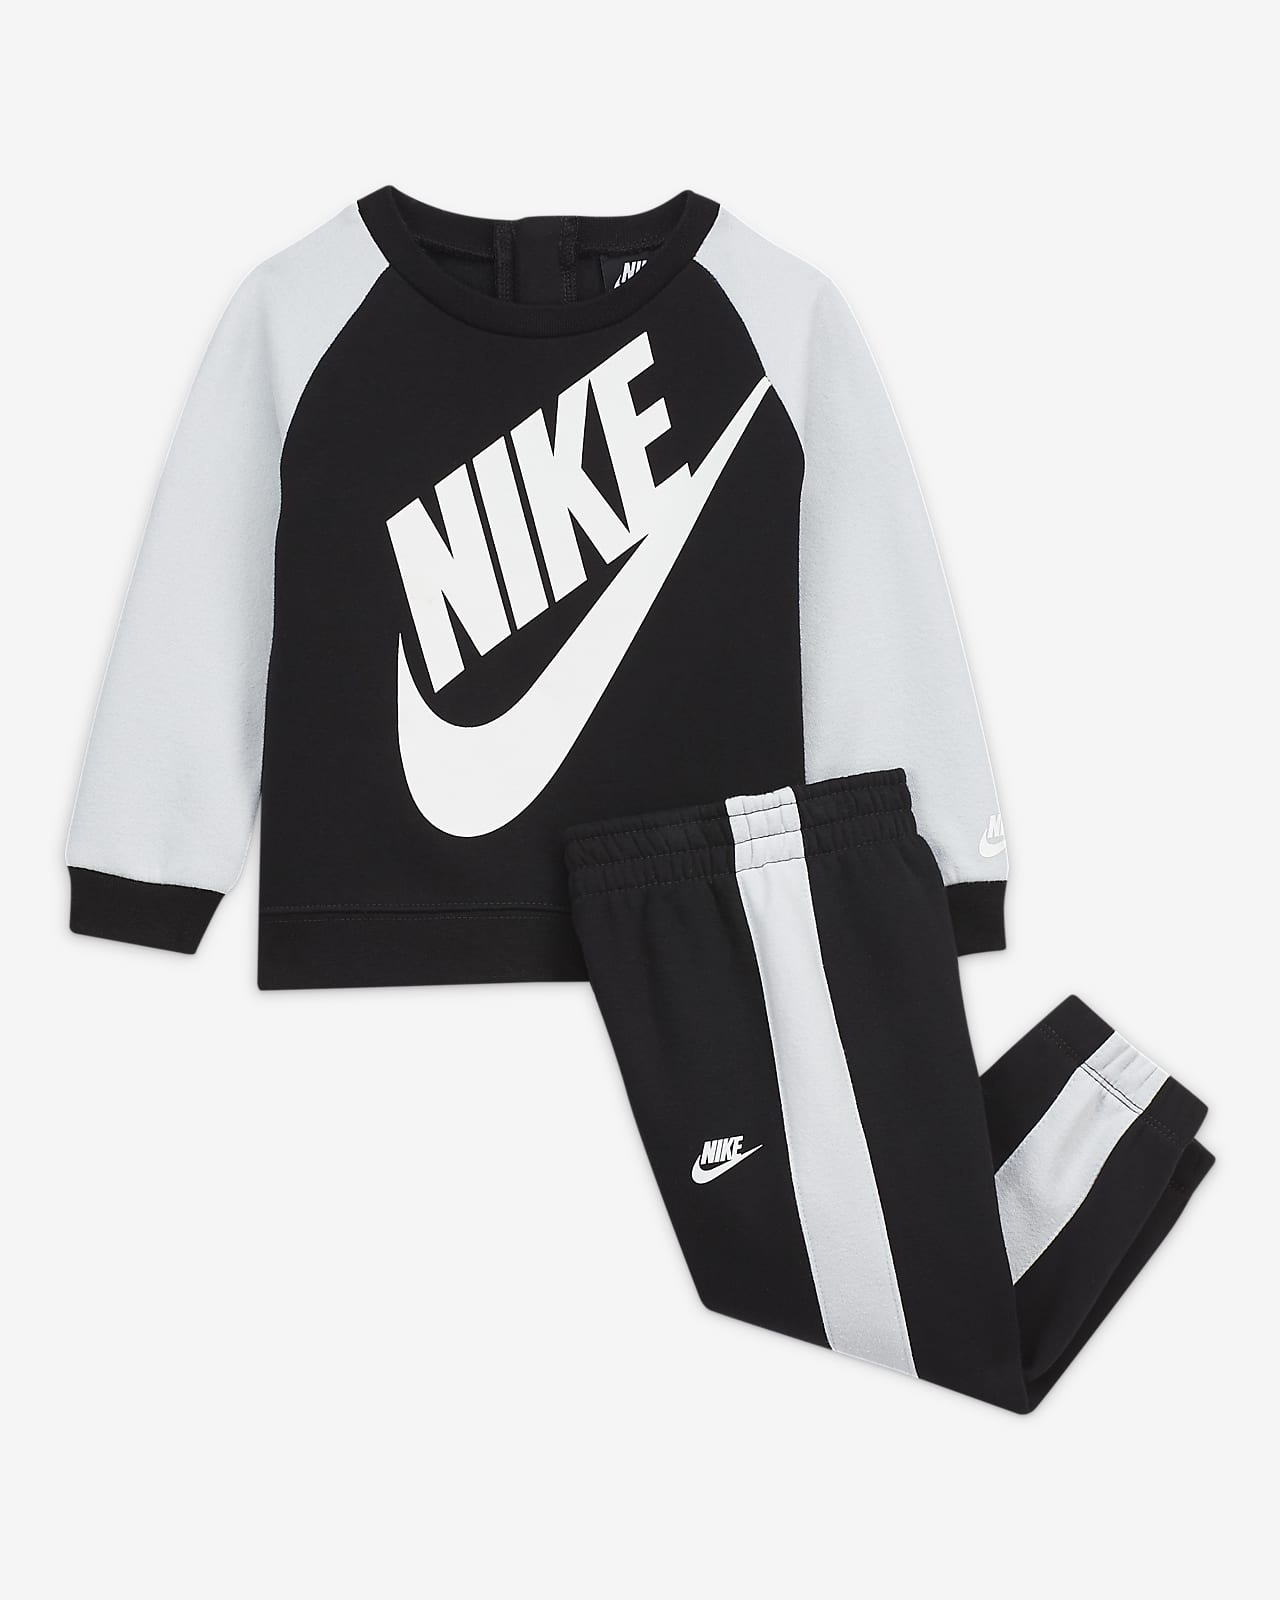 Nike Conjunt de dessuadora i pantalons - Nadó (12-24 M)